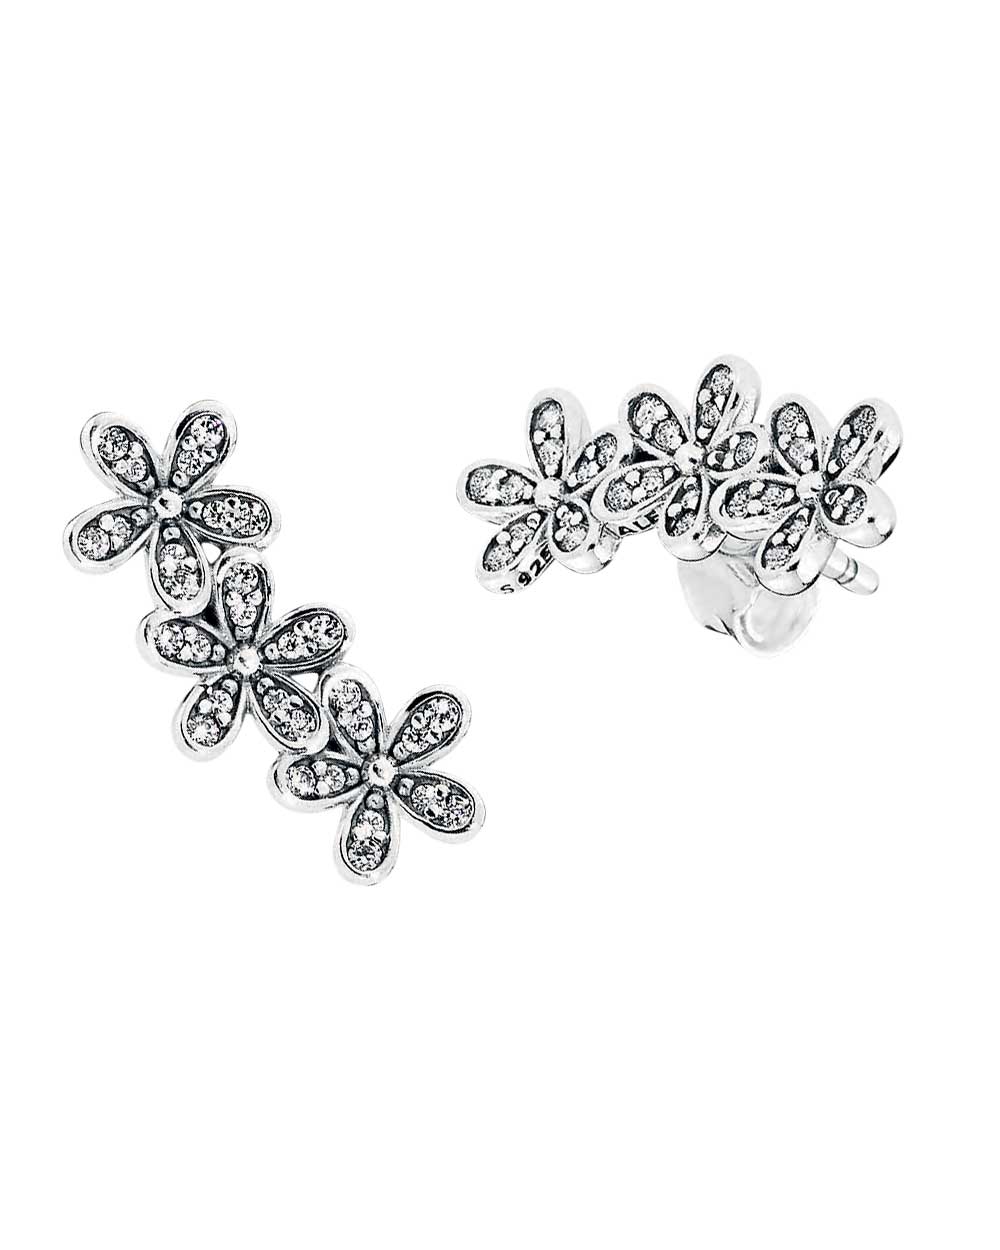 Pandora earrings, $89